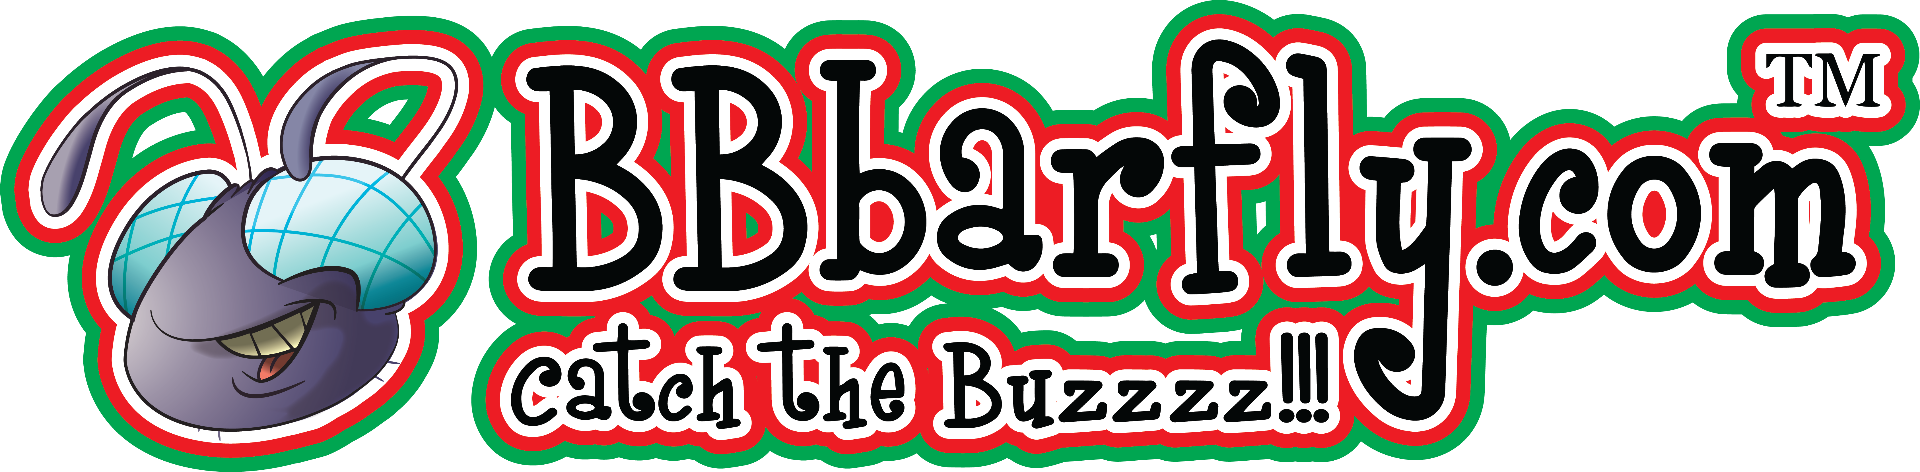 BBbarfly Christmas Logo